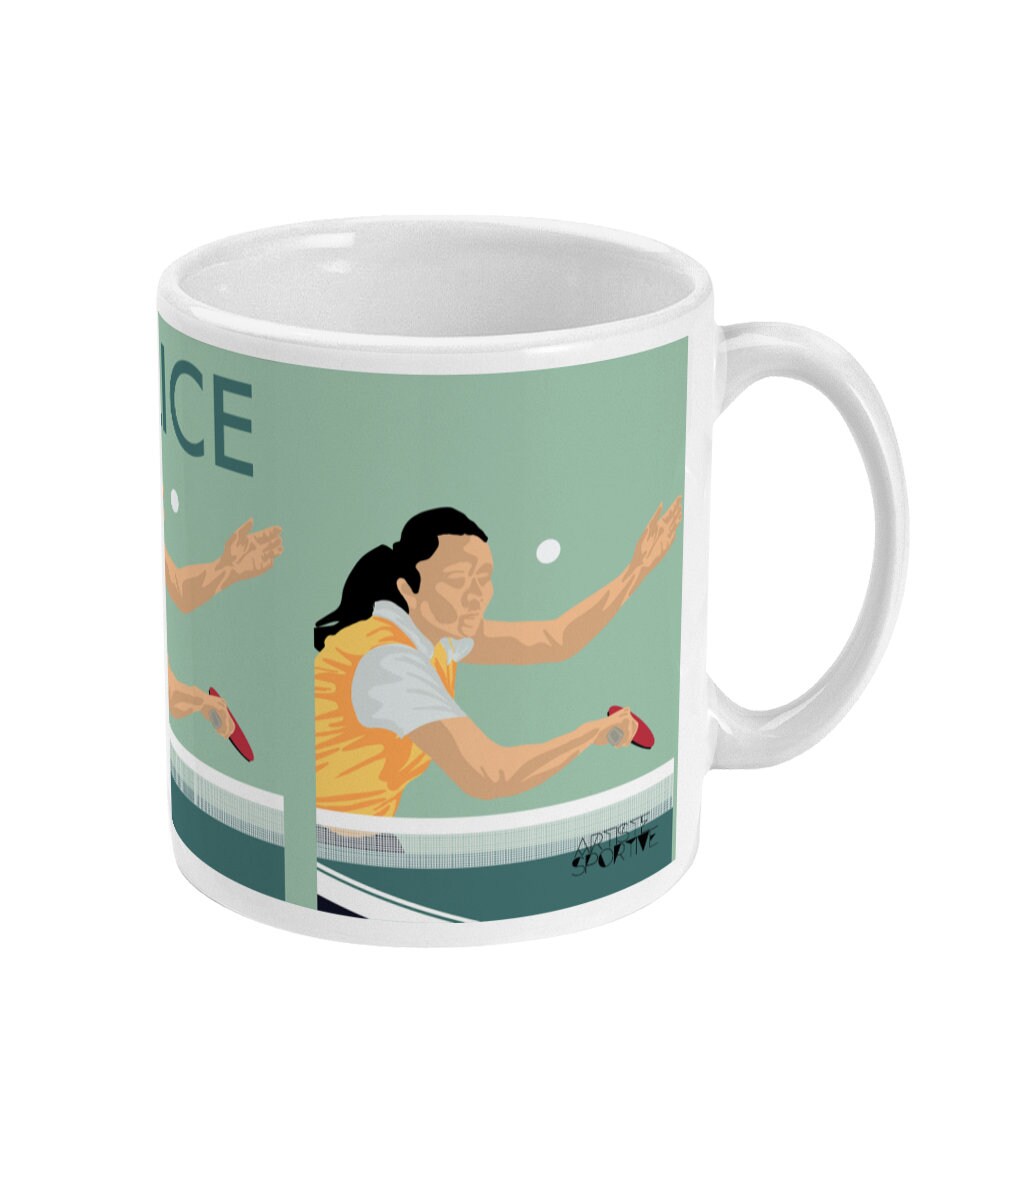 Ping Pong cup or mug "The table tennis player" - customizable